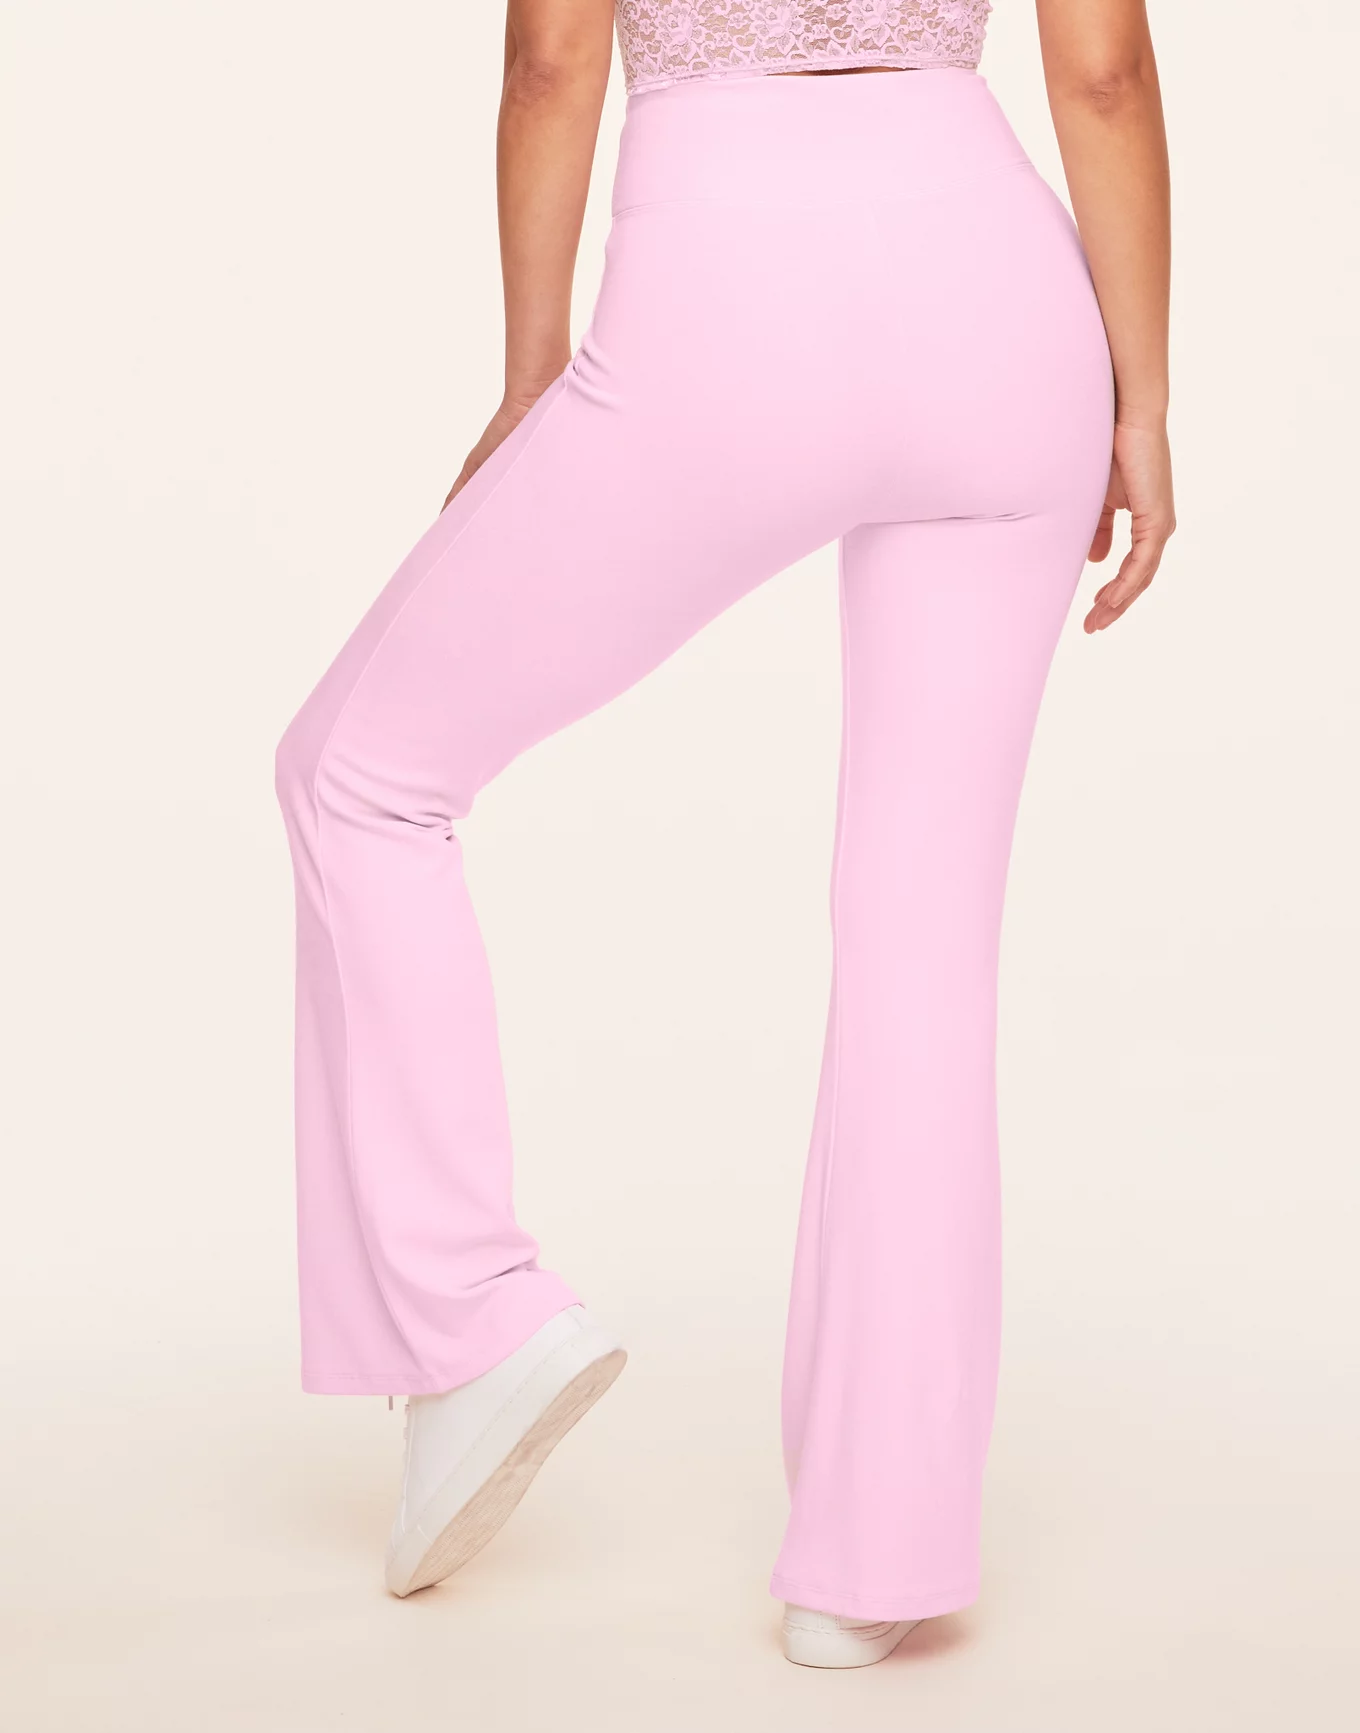 Pants & Jumpsuits  Baby Pink Yoga Pants Ankle Length Leggings Xl